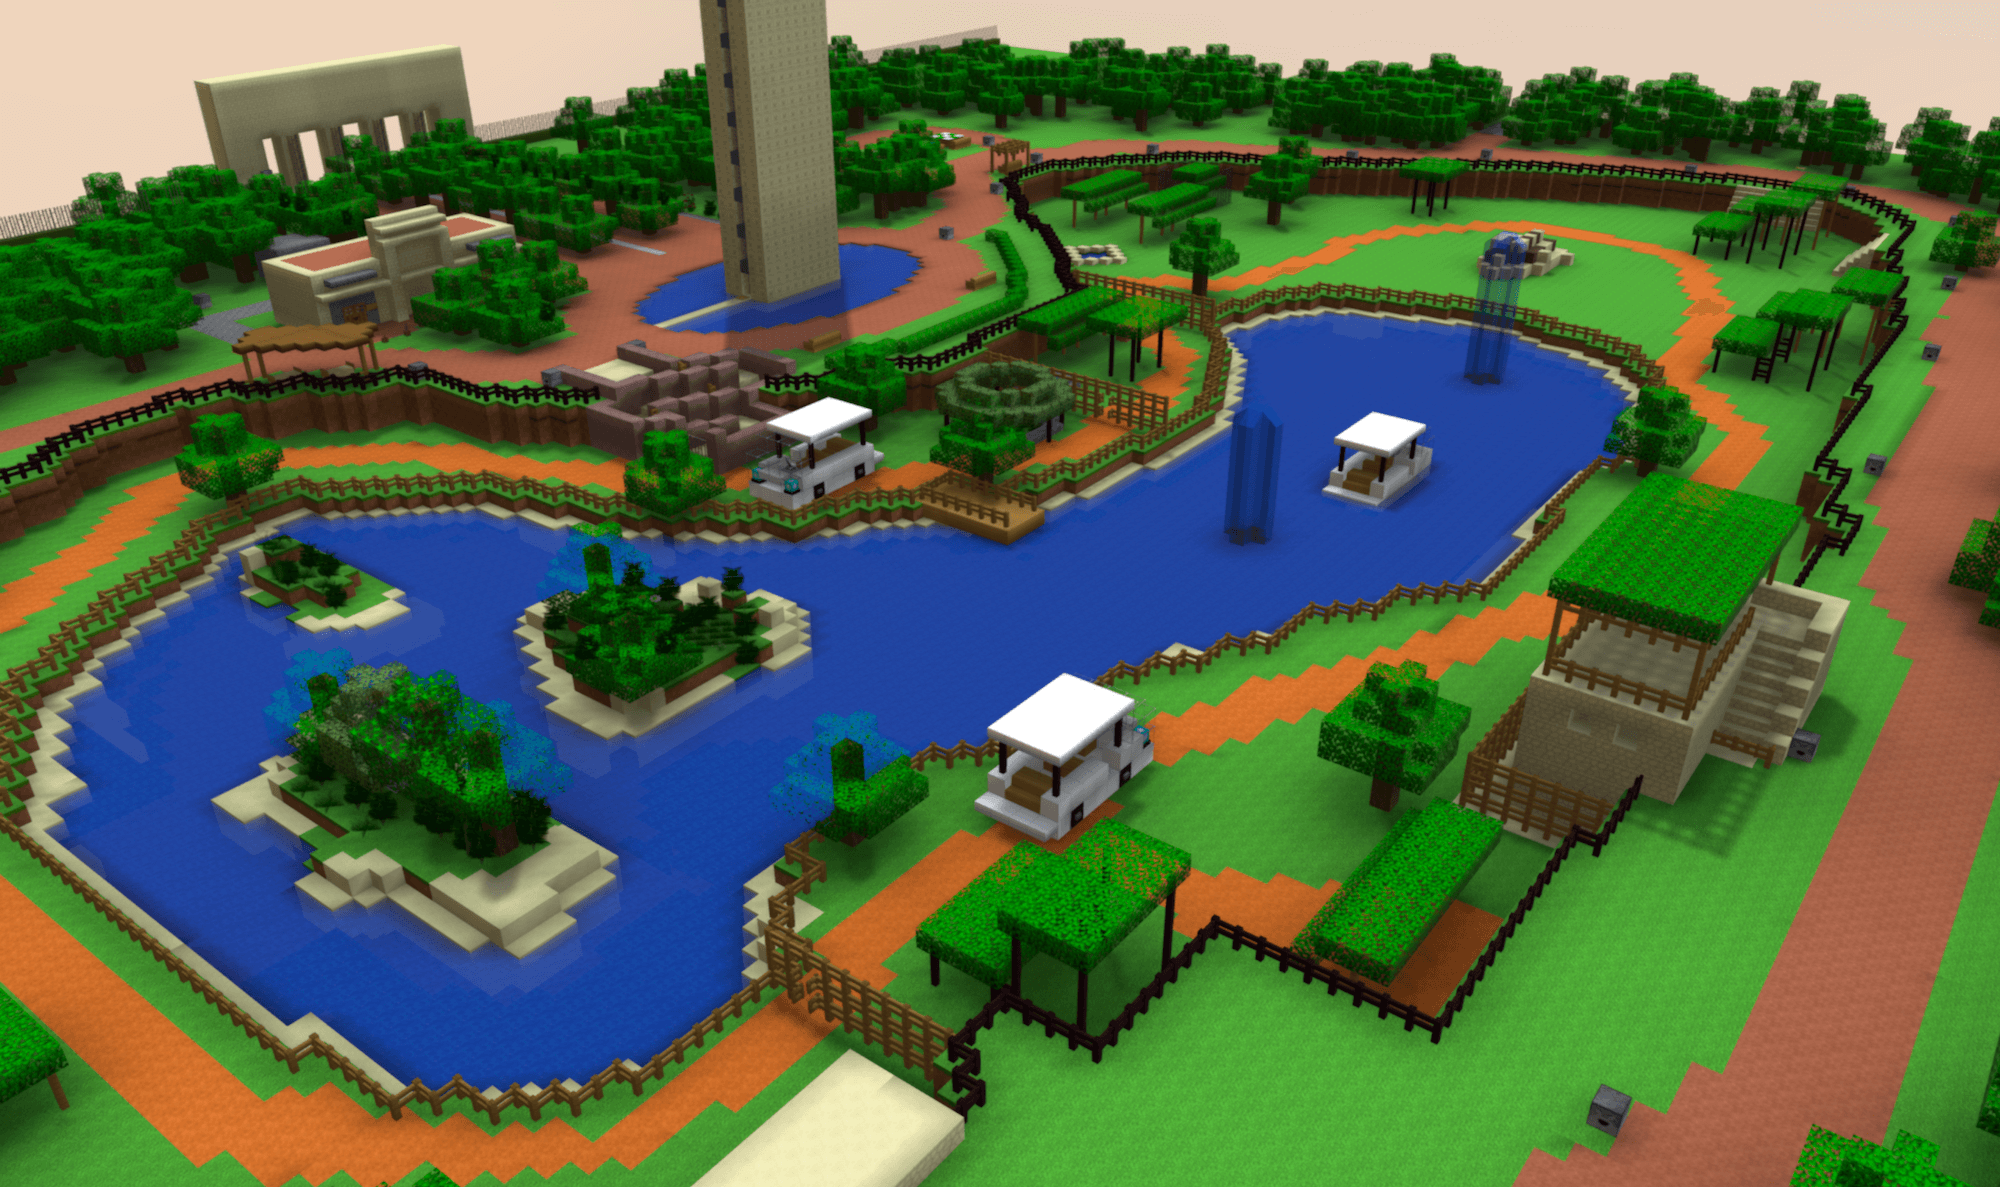    3D Minecraft Model of Parque Animaya, Merida   